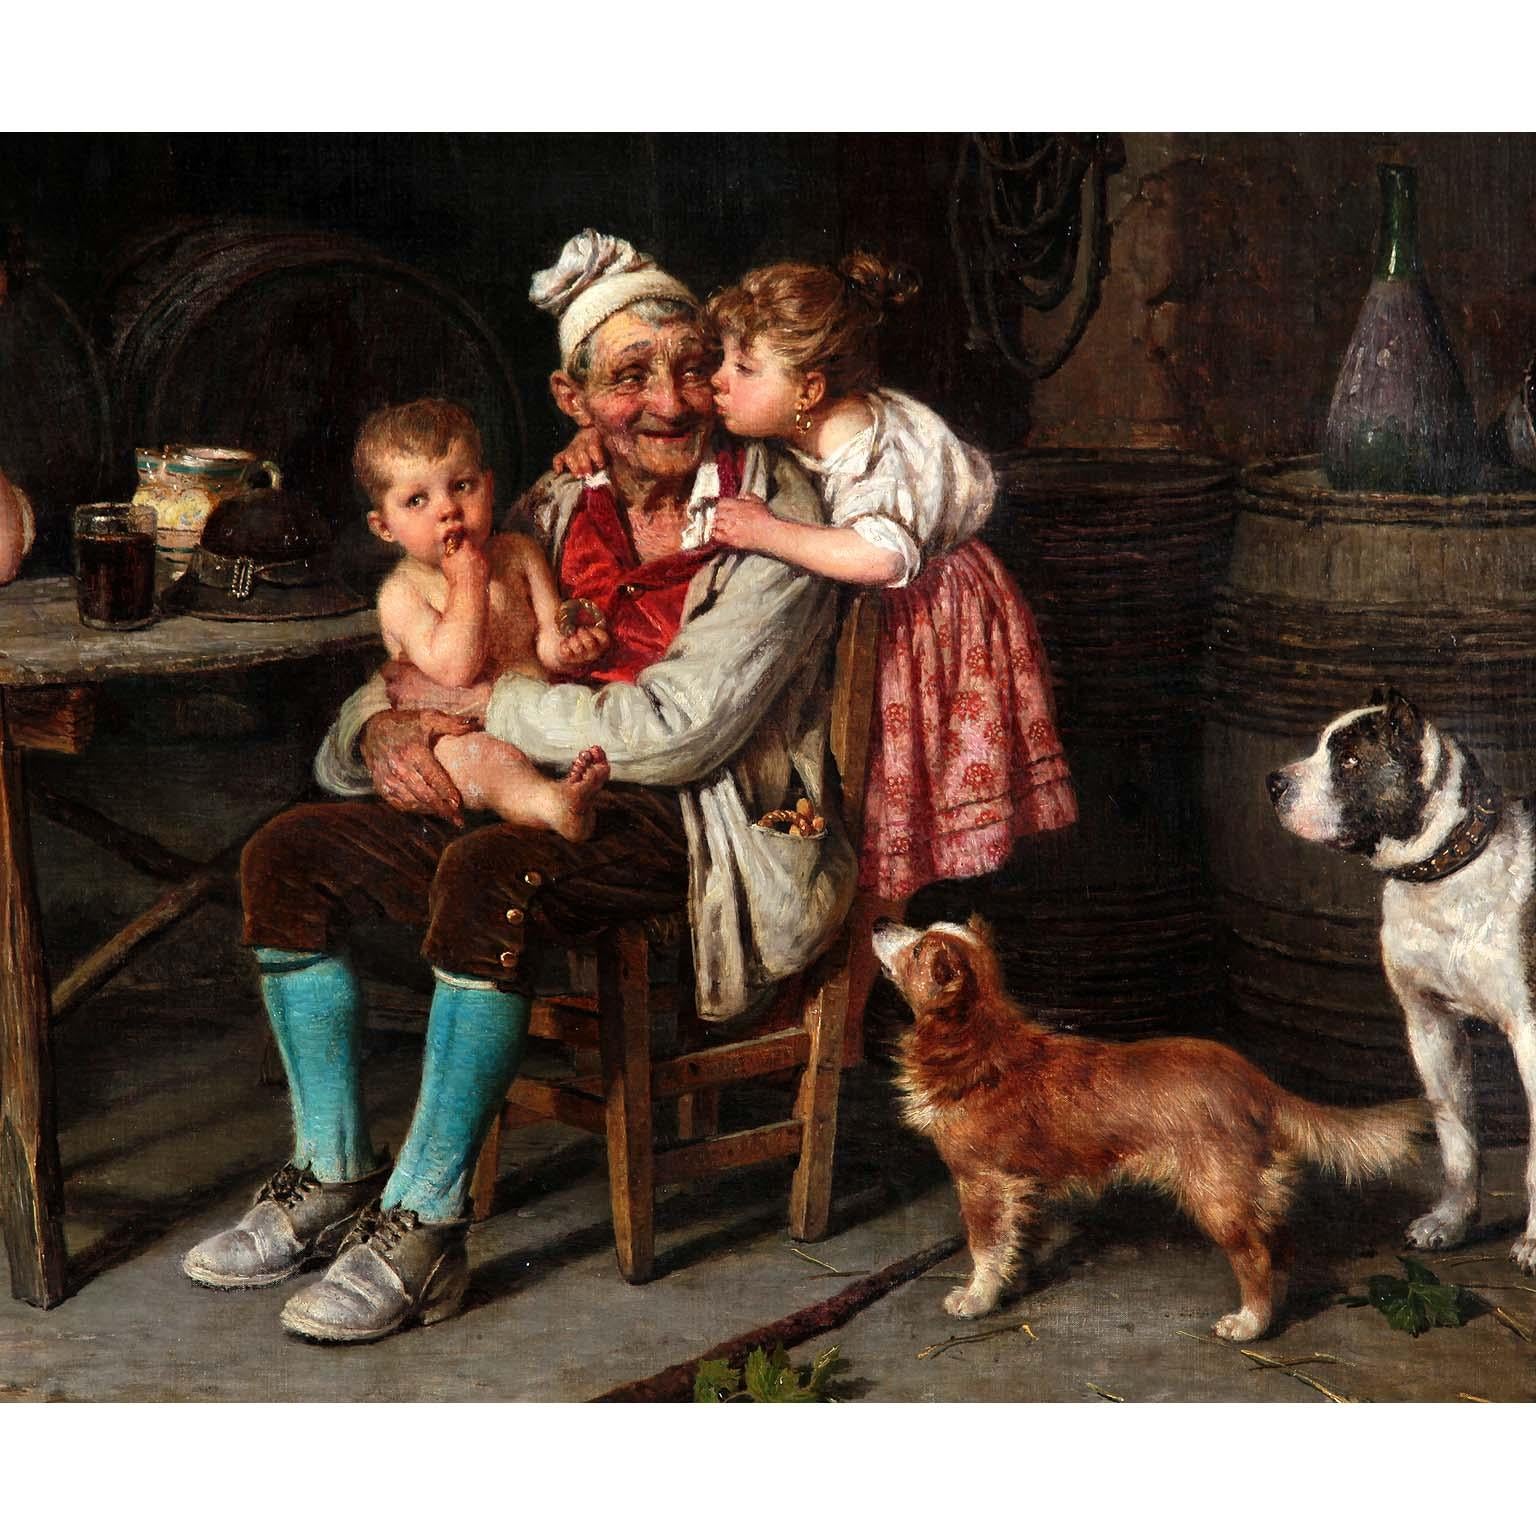 Country Federico Mazzotta 19th Century Oil on Canvas 